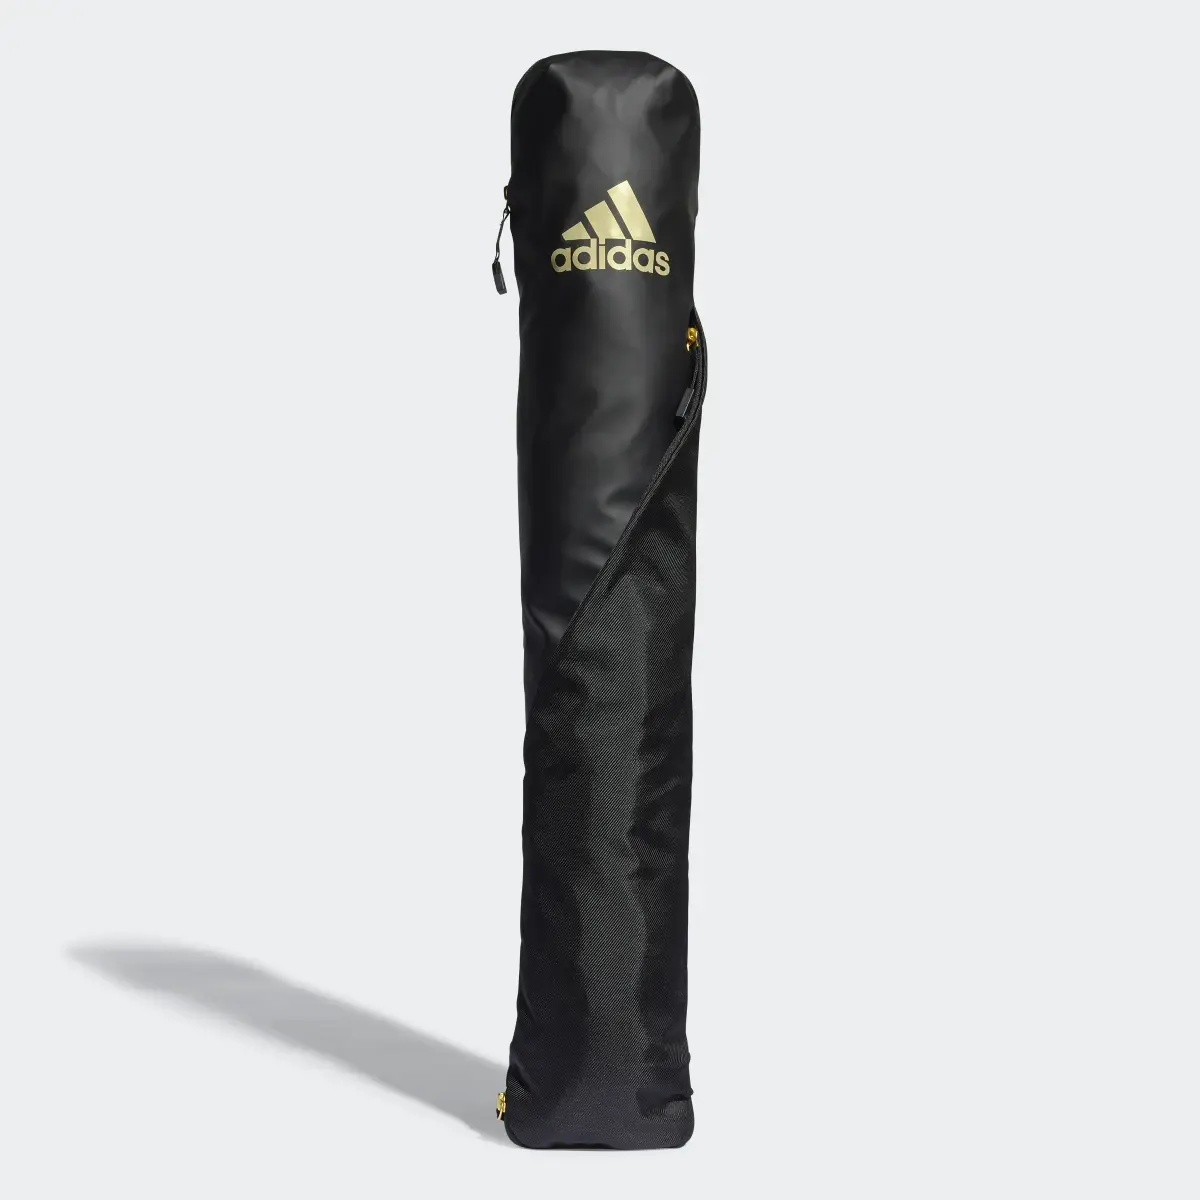 Adidas VS.6 Black/Gold Stick Sleeve. 2